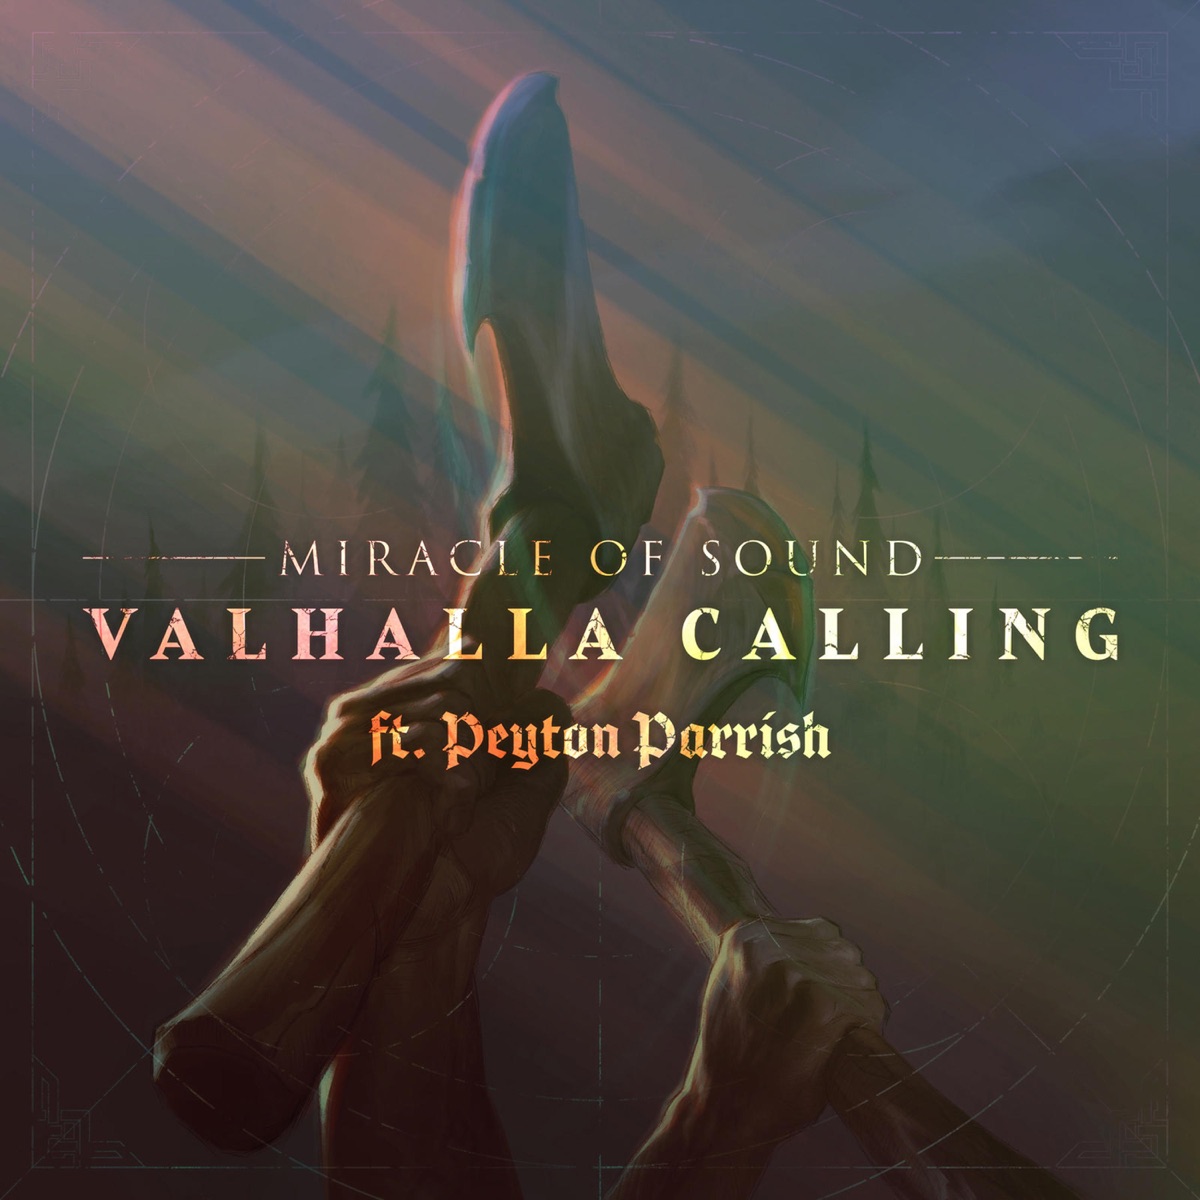 Valhalla calling feat peyton parrish mp3 download